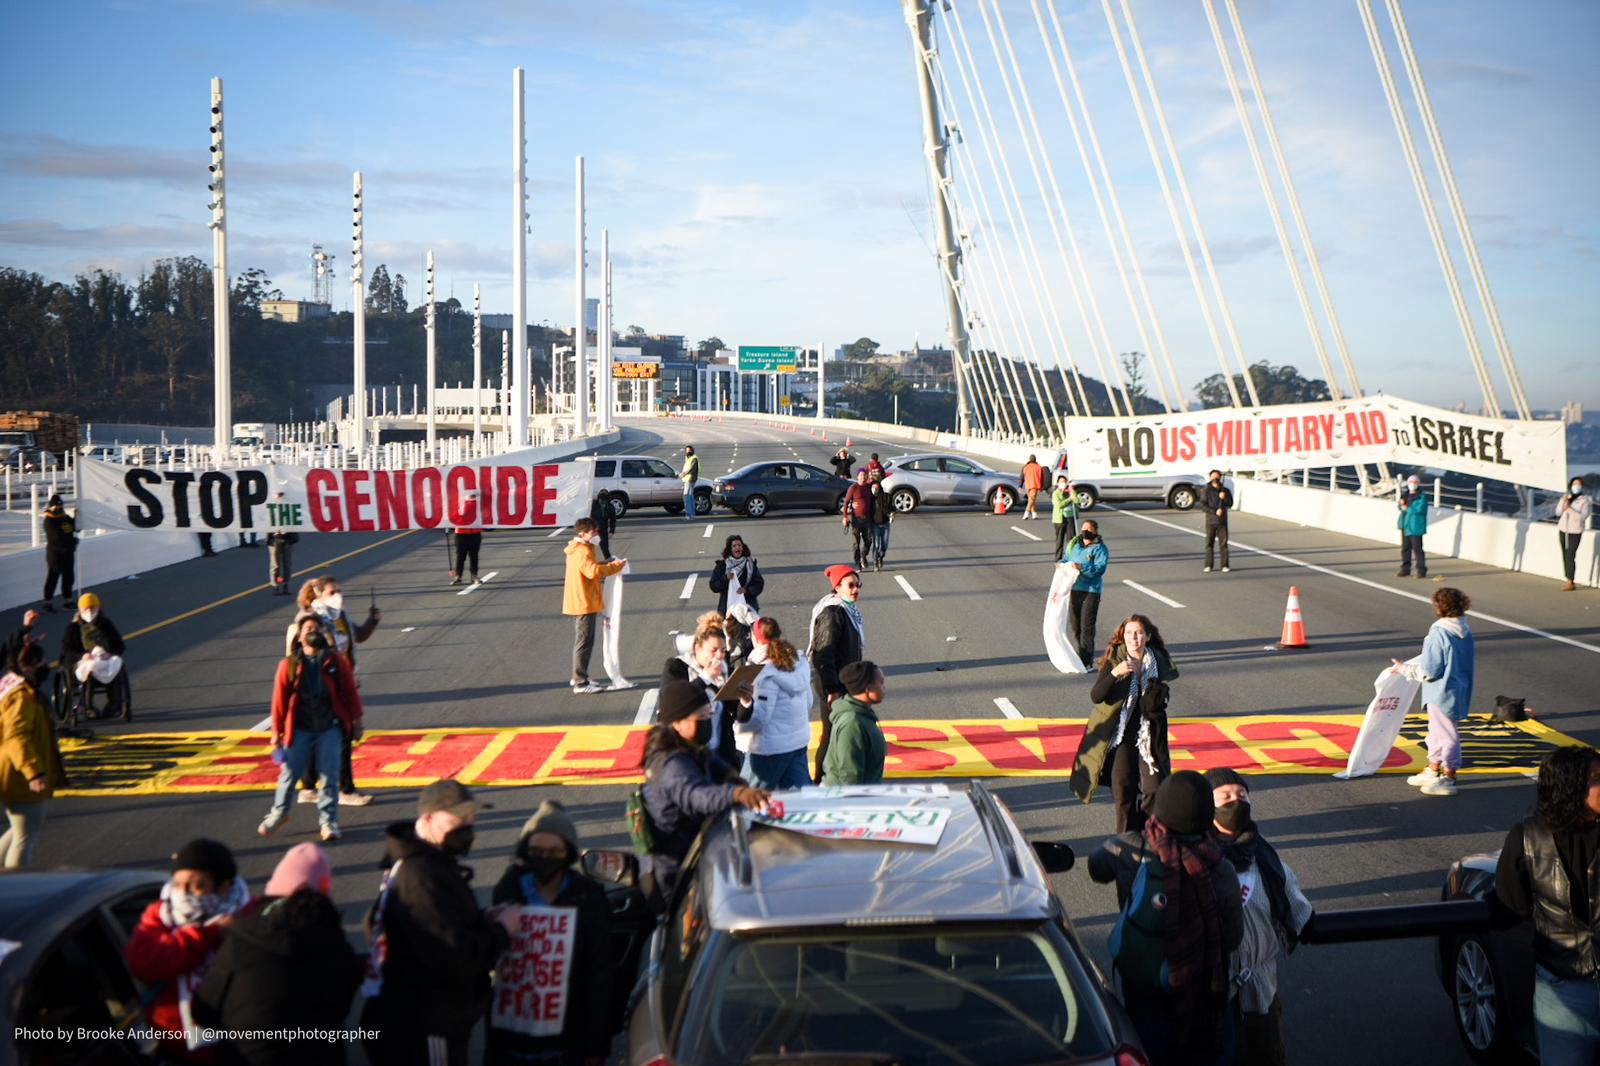 Protestors shut down the SF Bay Bridge on Nov 16th demanding a ceasefire in Israel's war on Gaza